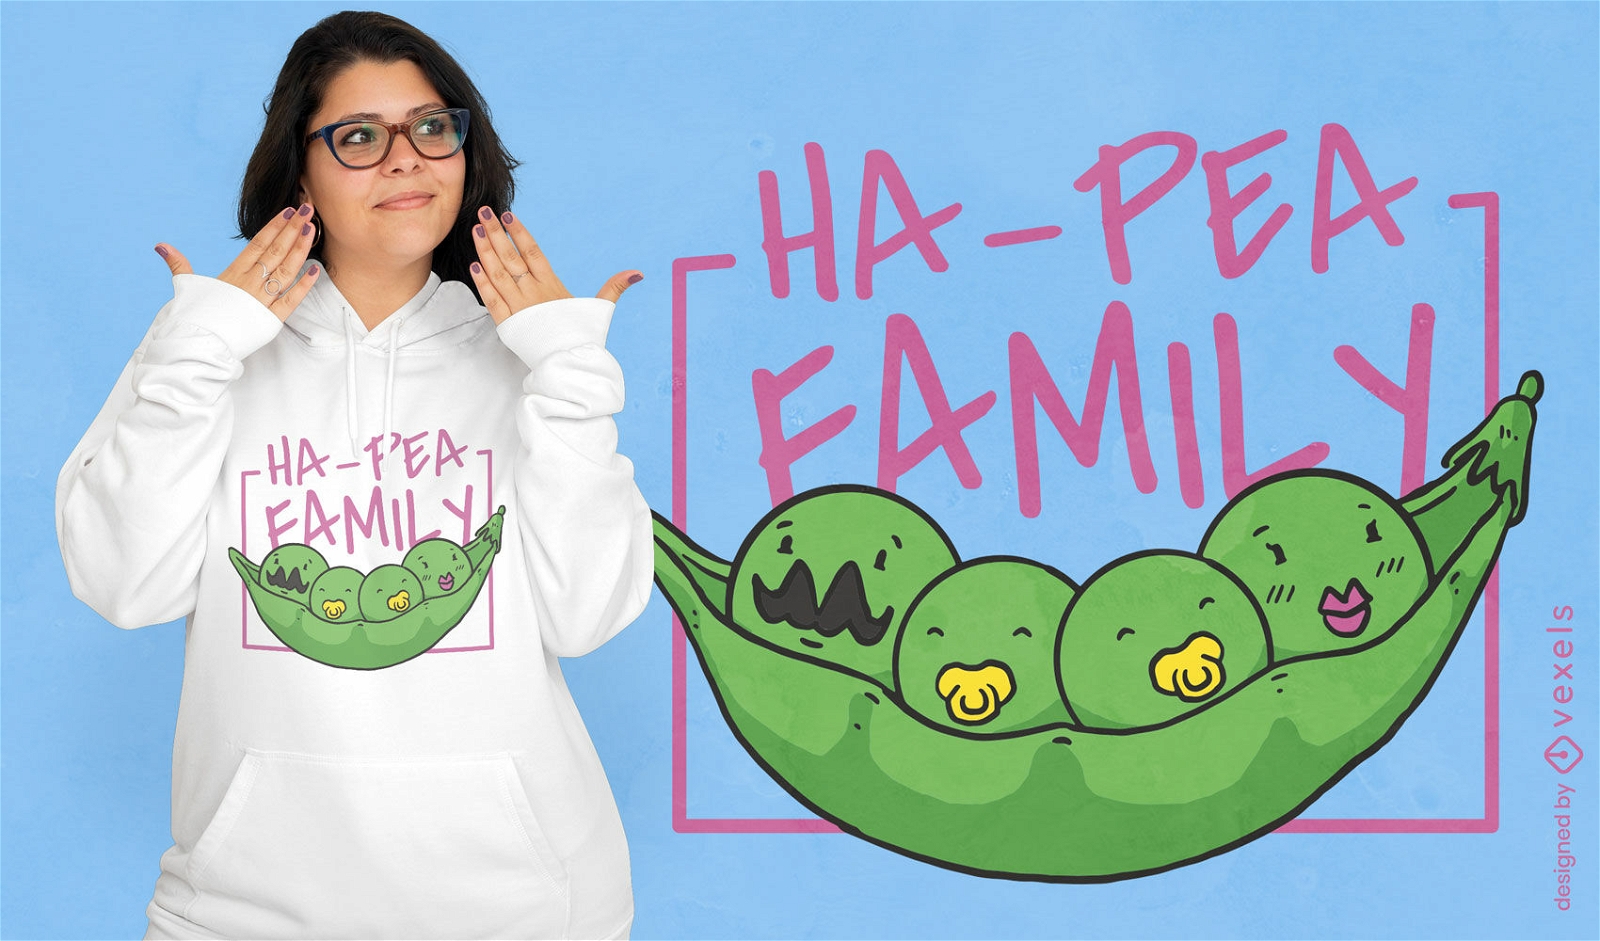 Pea vegetable family cartoon t-shirt design